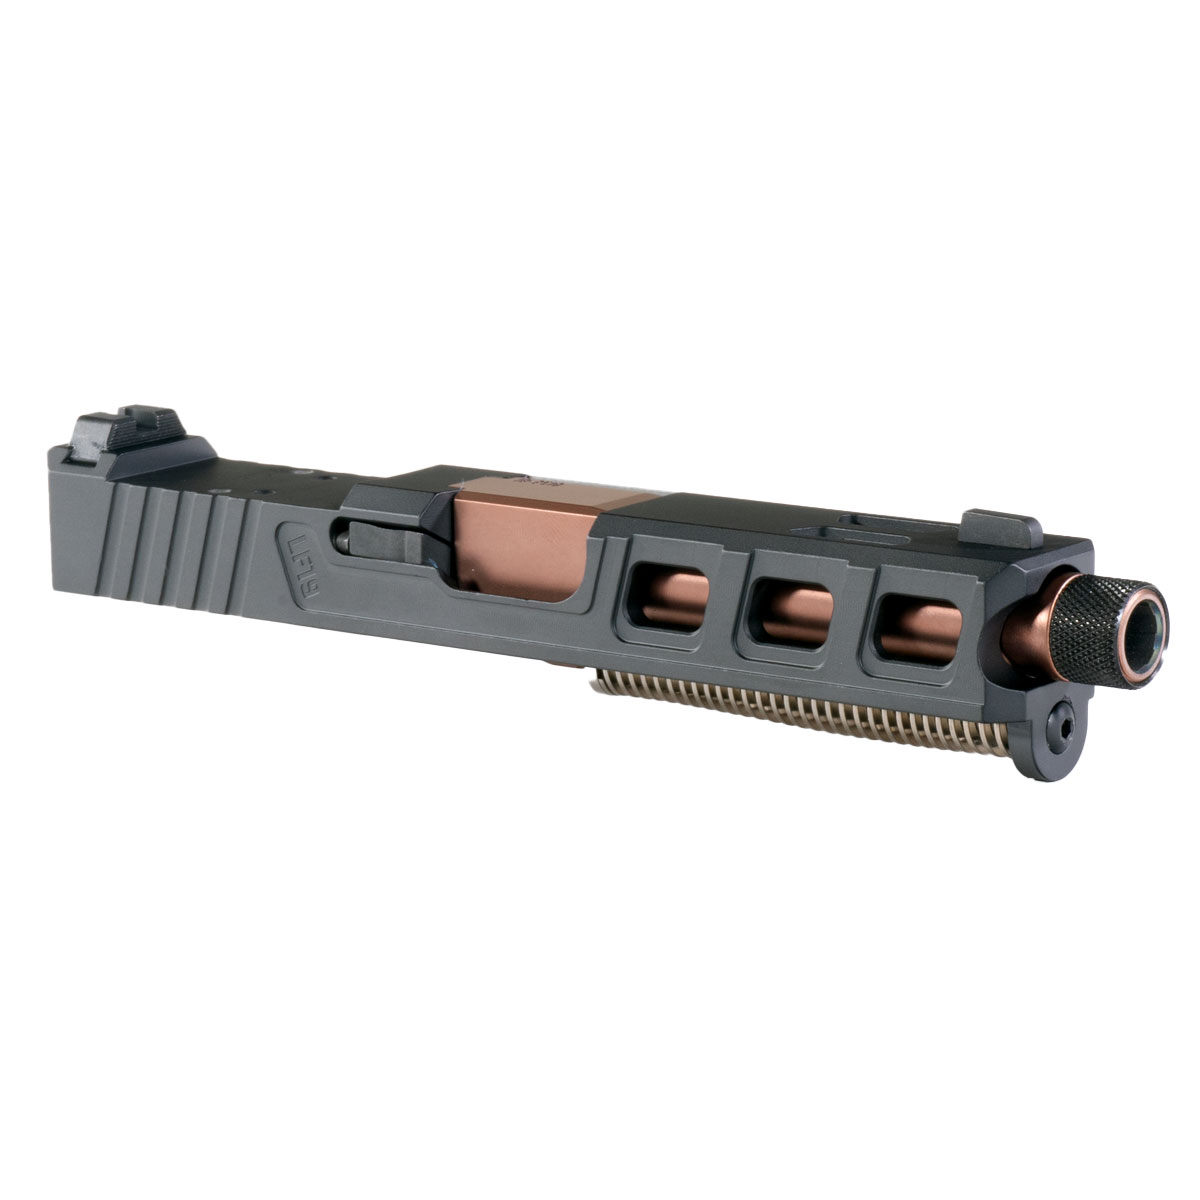 DD 'Steel Stallion' 9mm Complete Slide Kit - Glock 19 Gen 1-3 Compatible